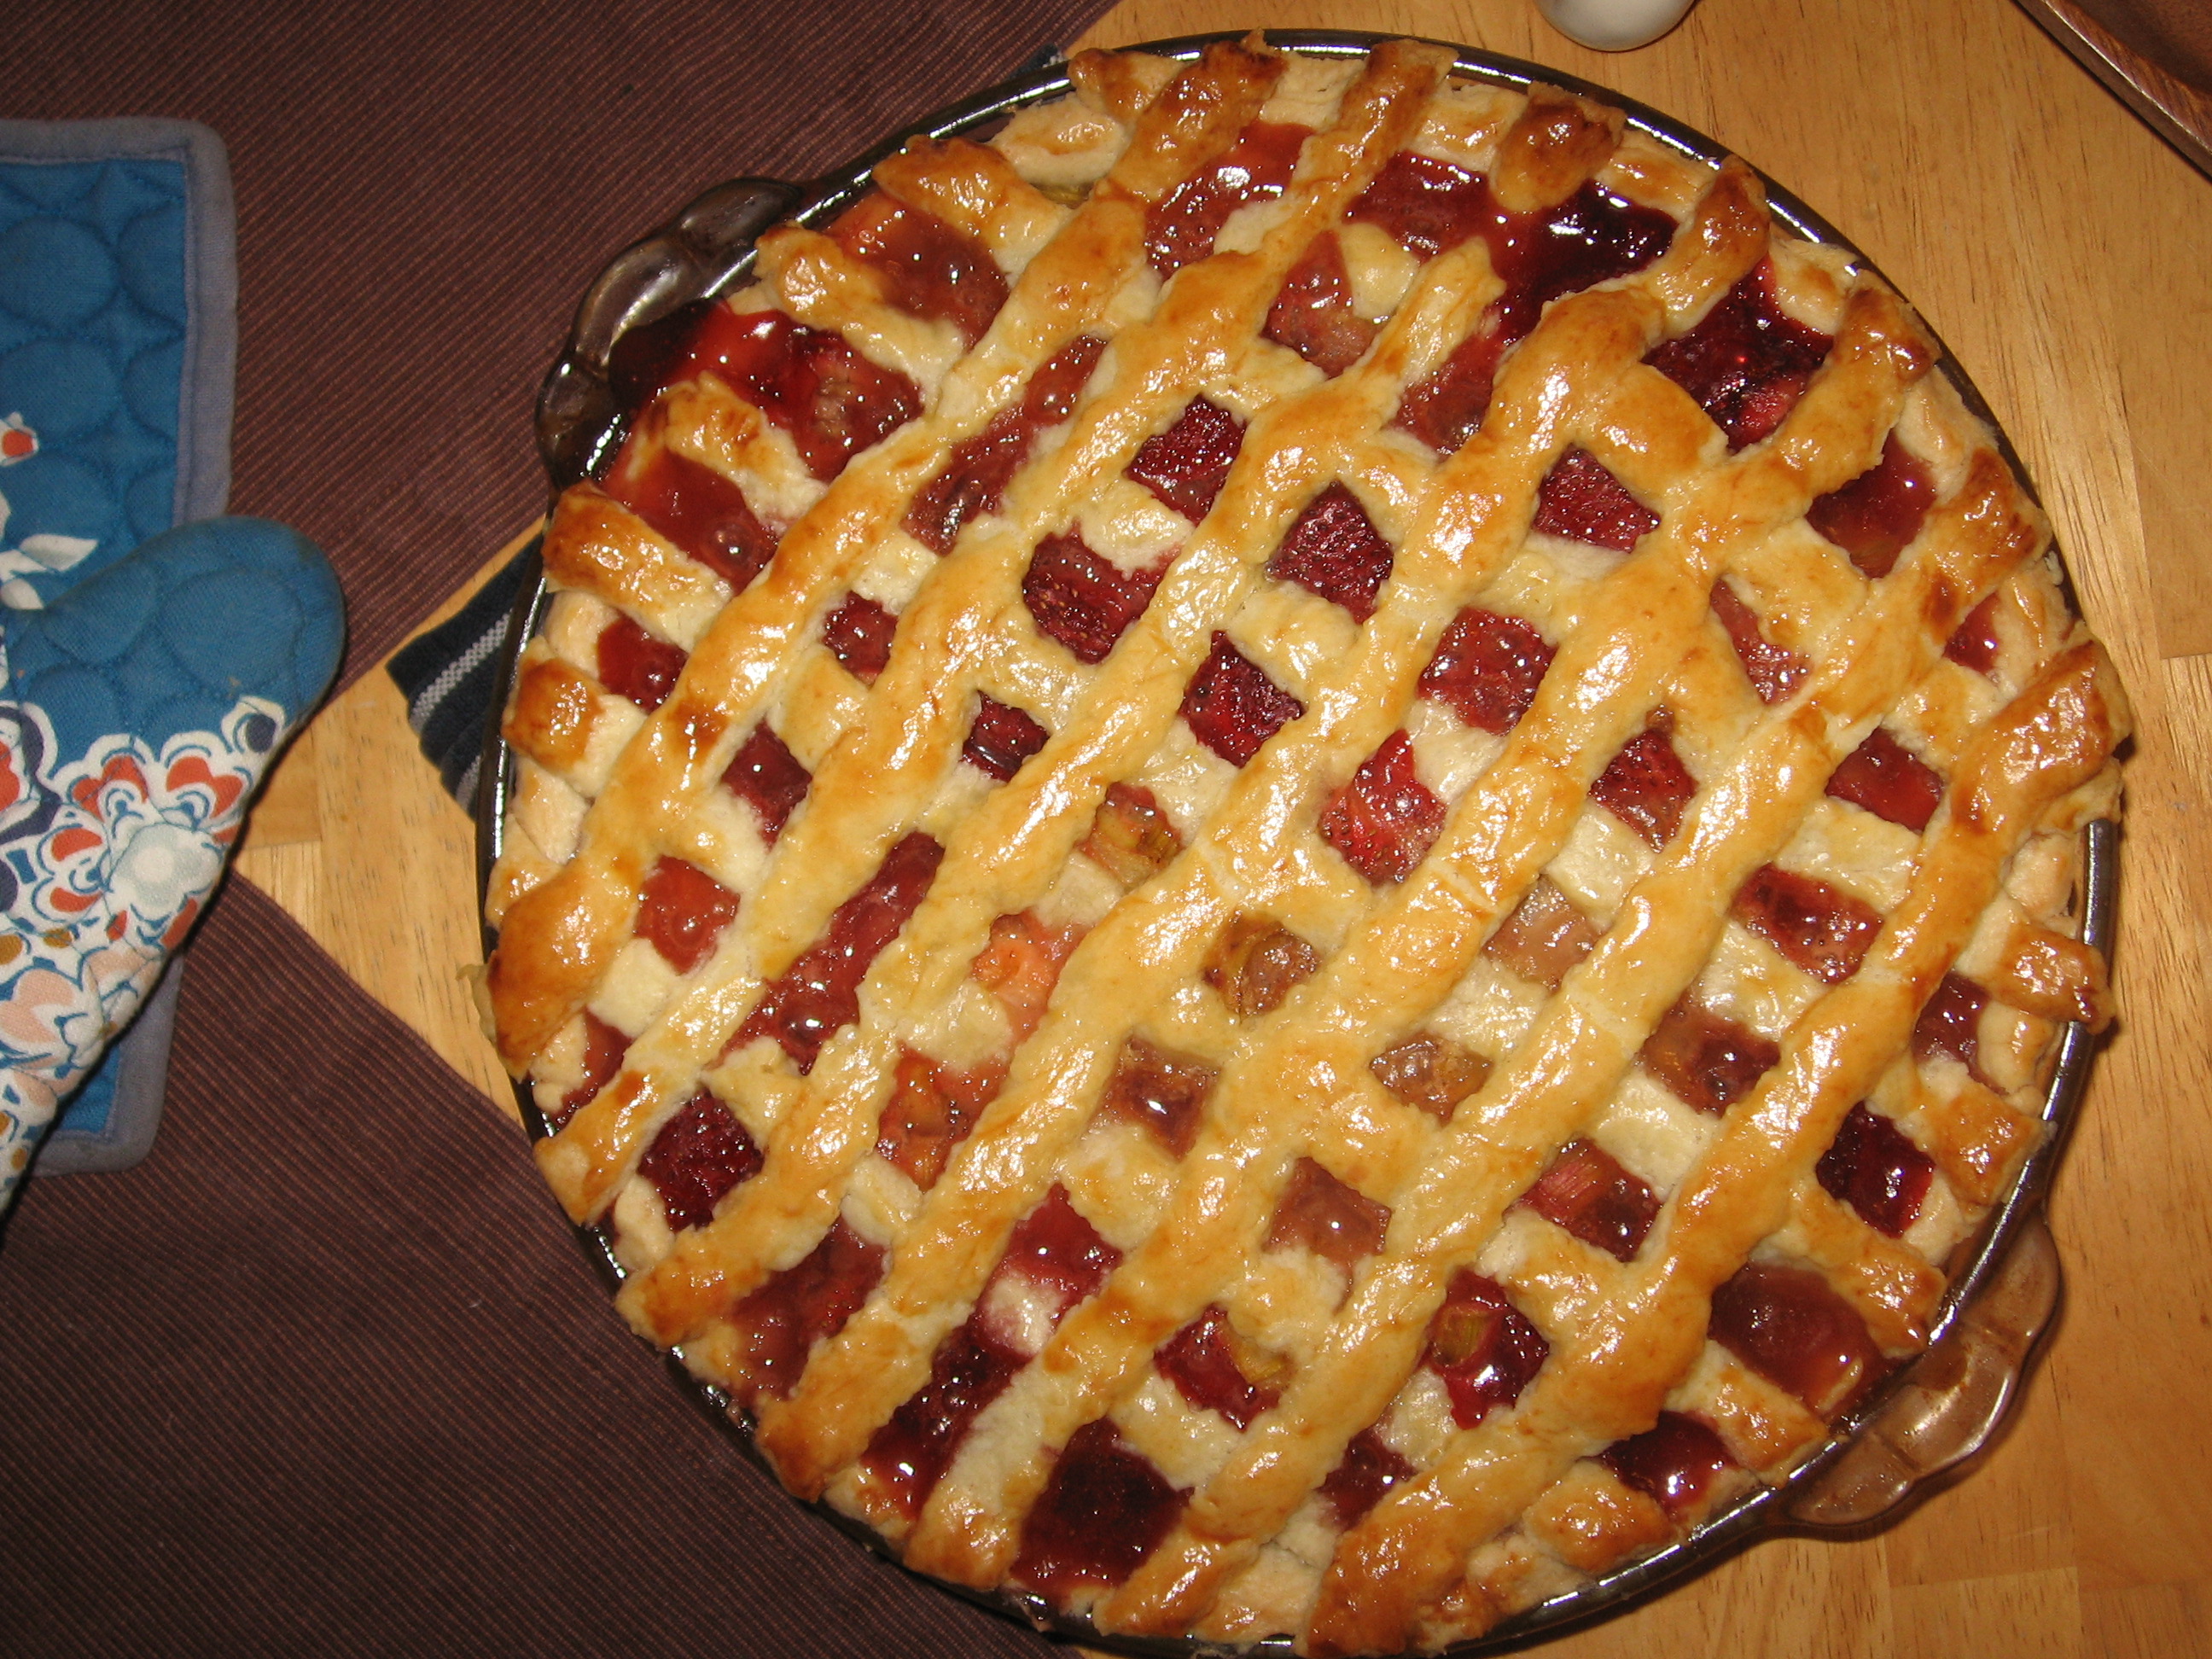 Pie_capers_strawberry_rhubarb_pie,_July_2007.jpg